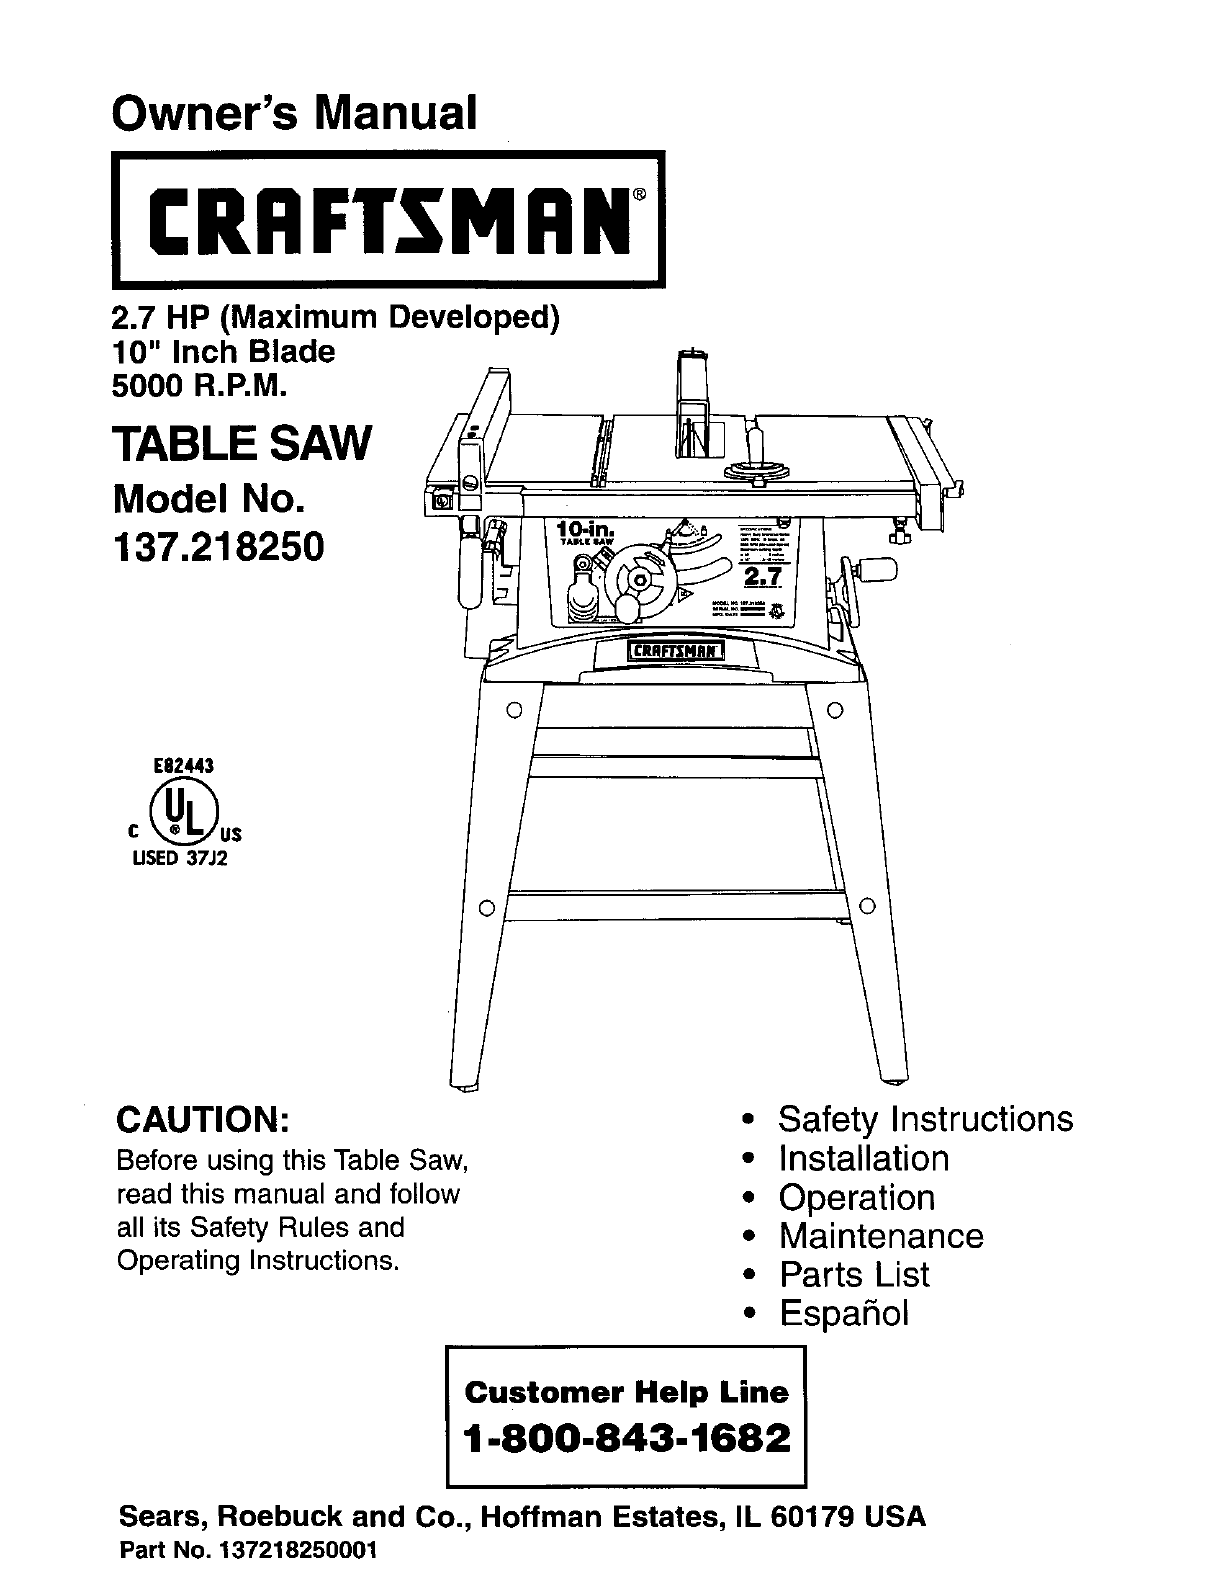 Craftsman Saw 137.21825 User Guide | ManualsOnline.com